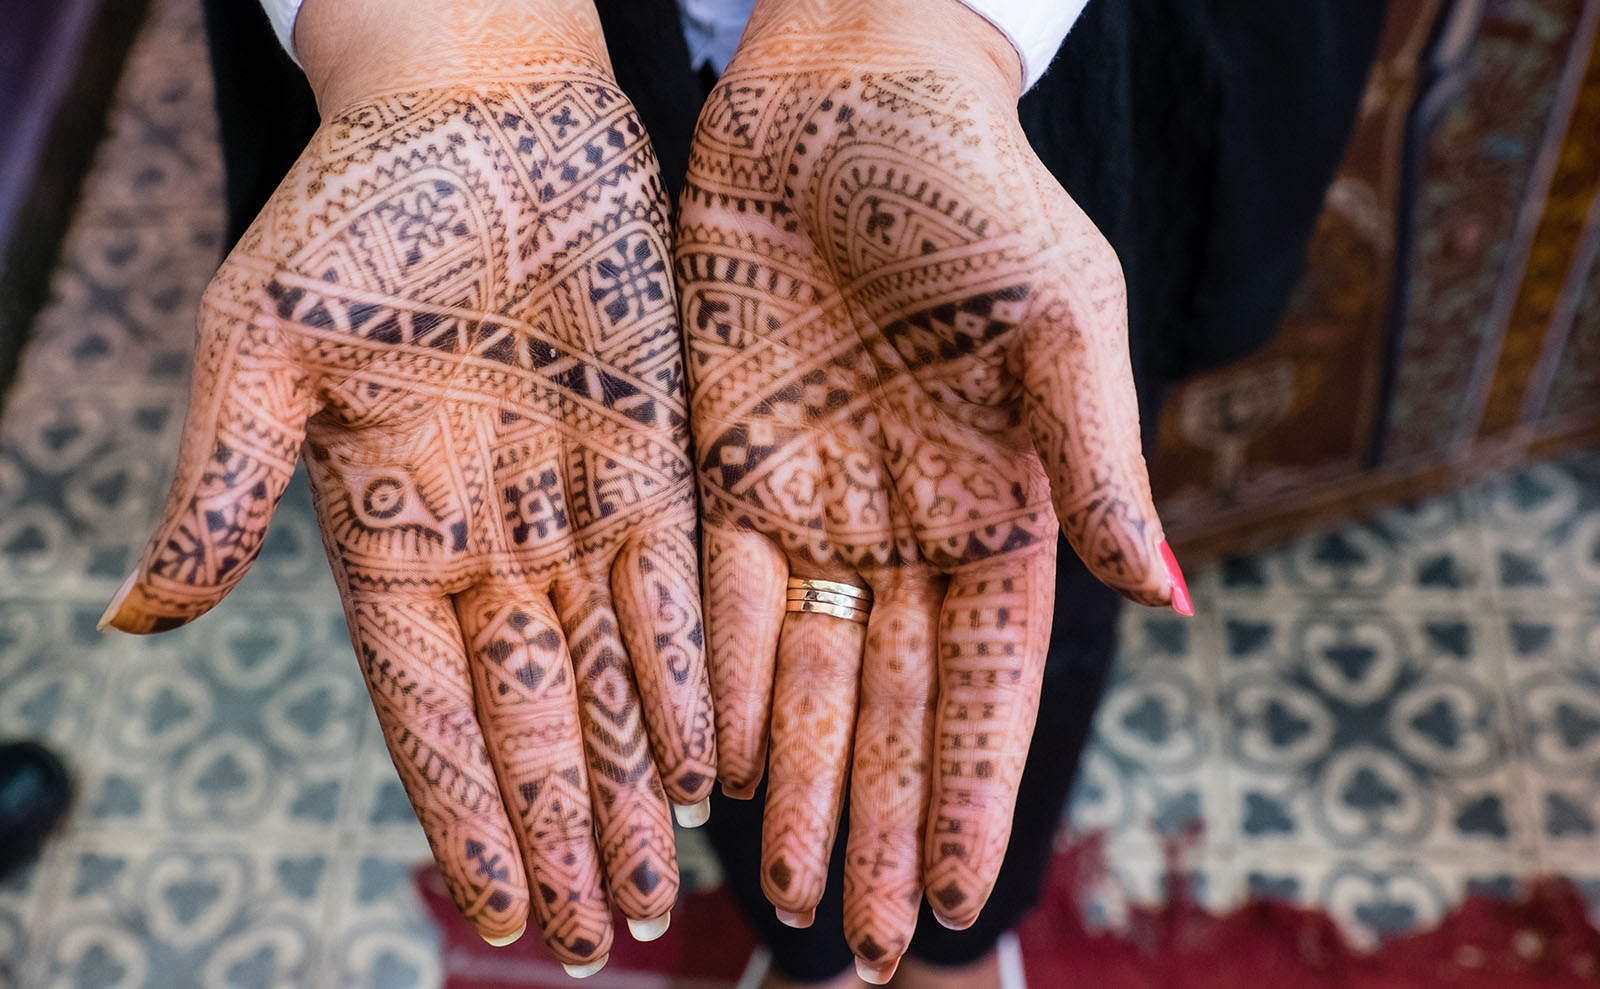 a woman's hands displaying dark henna tattoos